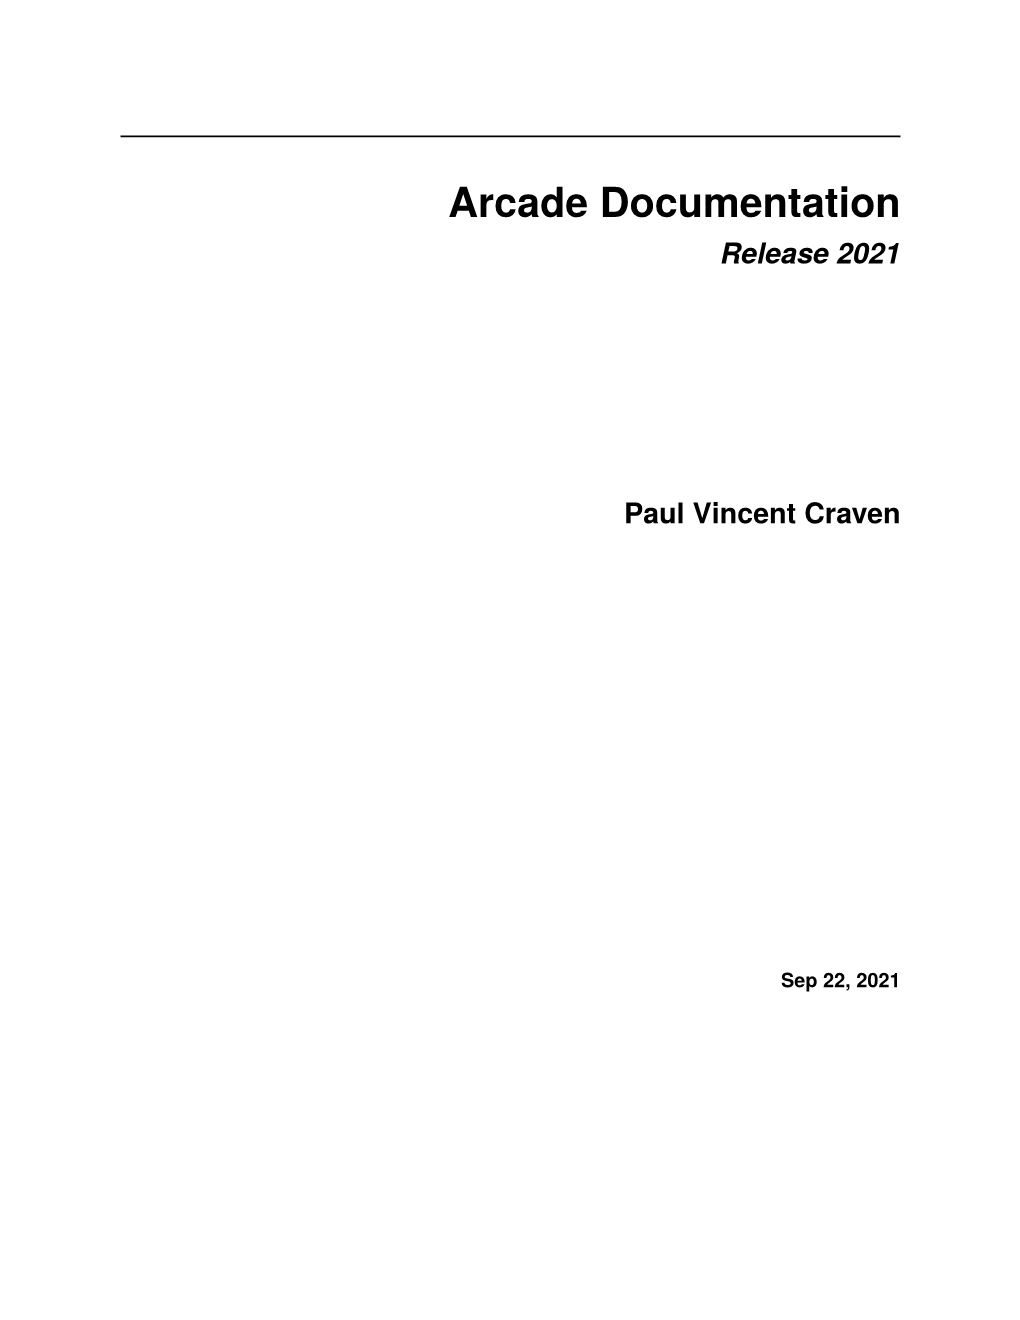 Arcade Documentation Release 2021